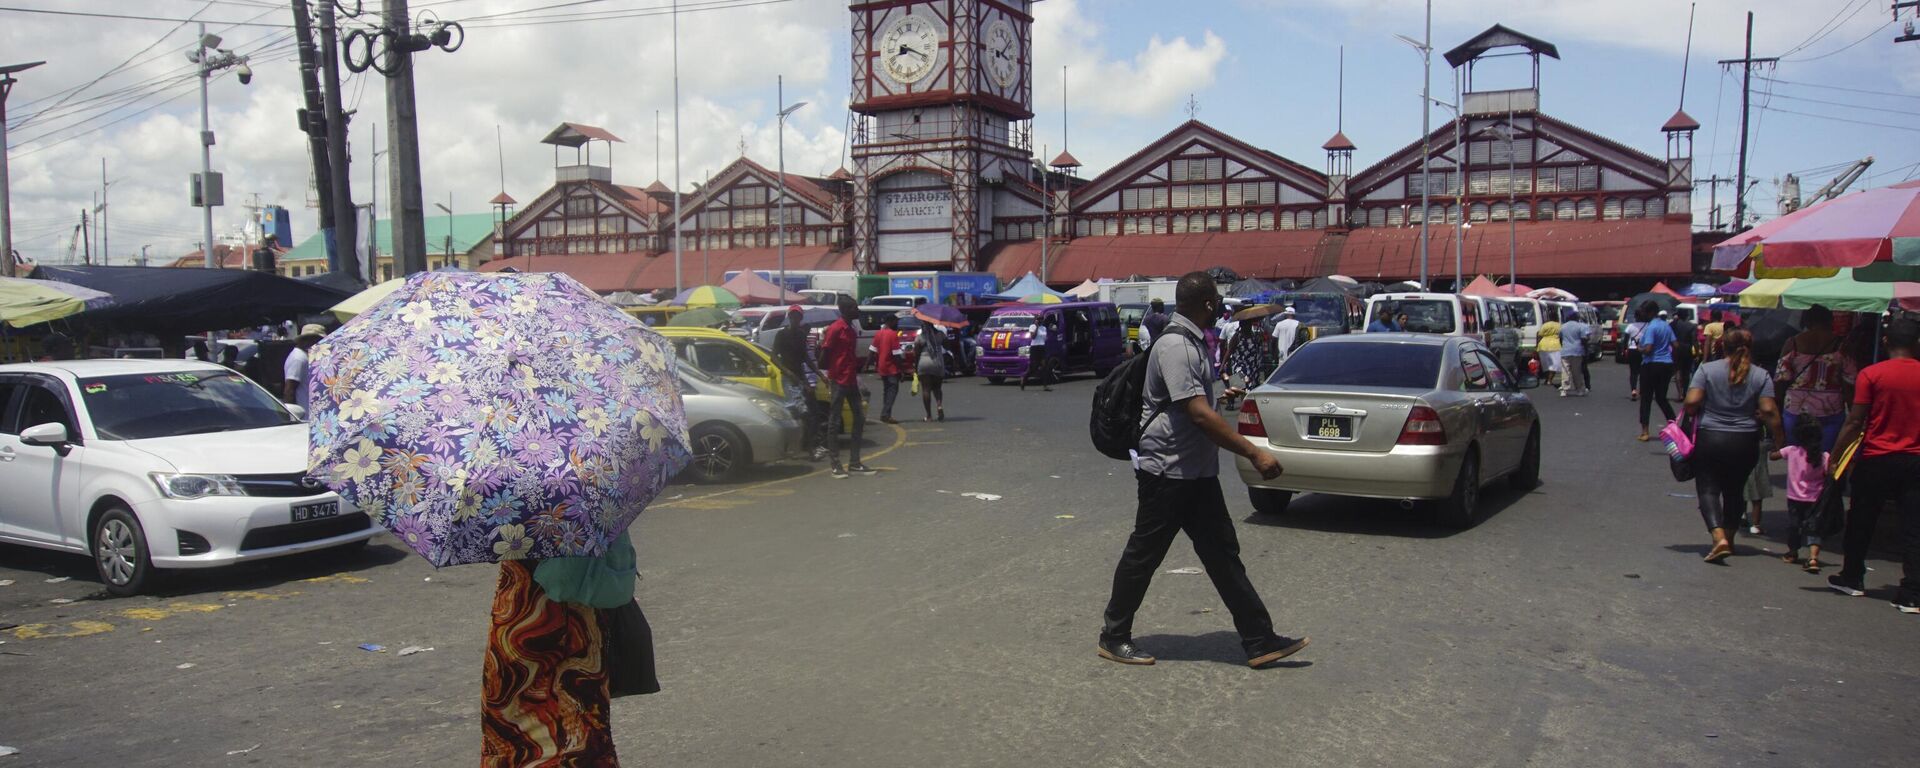 Picture of the Stabroek Market in Georgetown, Guyana, taken on September 23, 2022. - Sputnik India, 1920, 10.01.2023